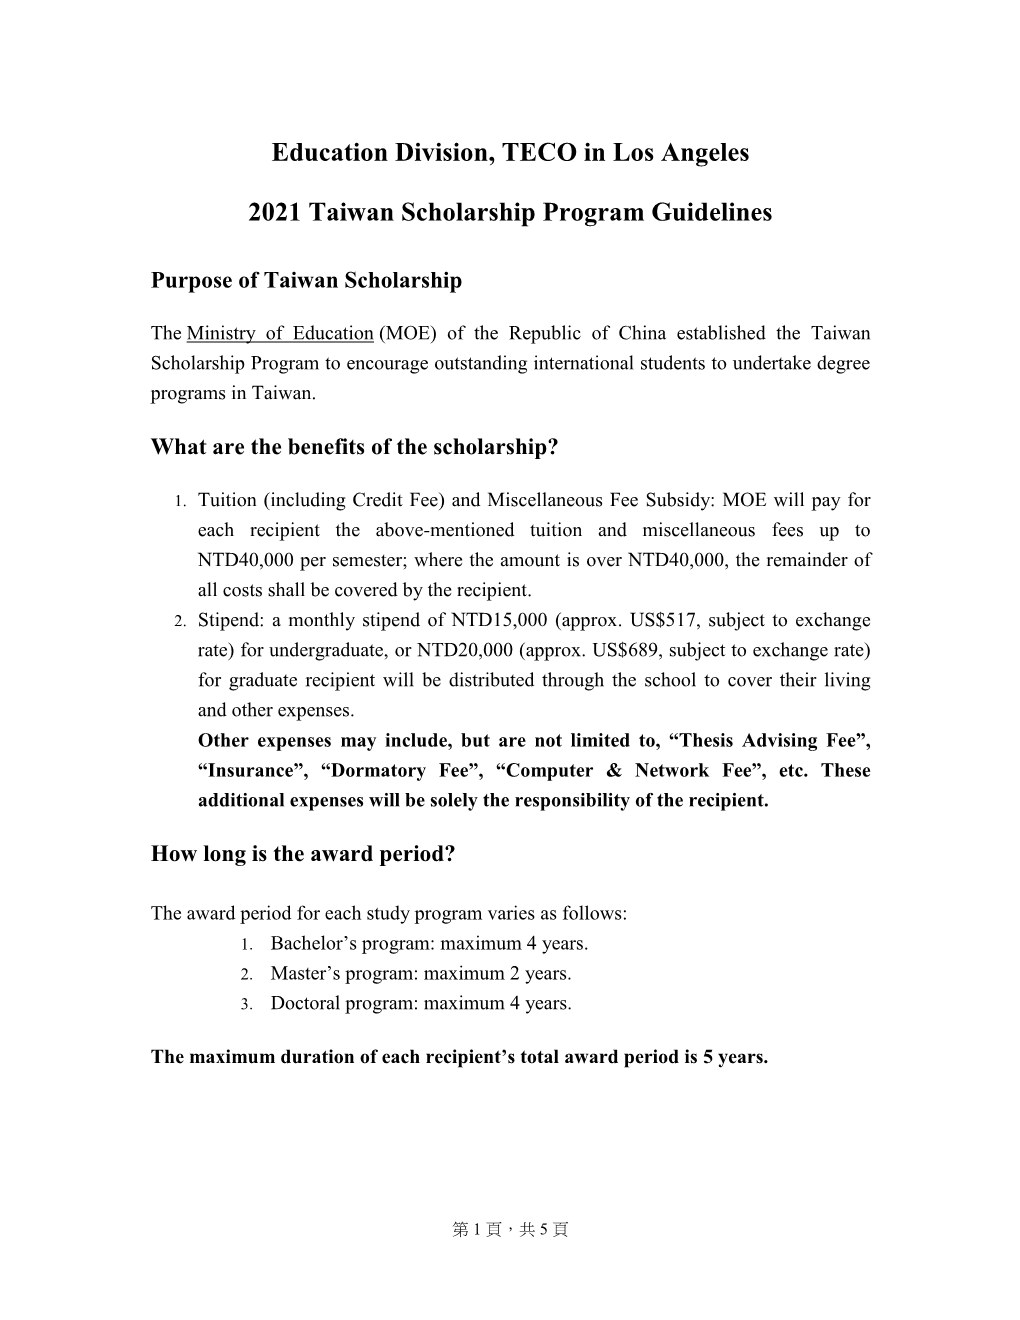 Education Division, TECO in Los Angeles 2021 Taiwan Scholarship